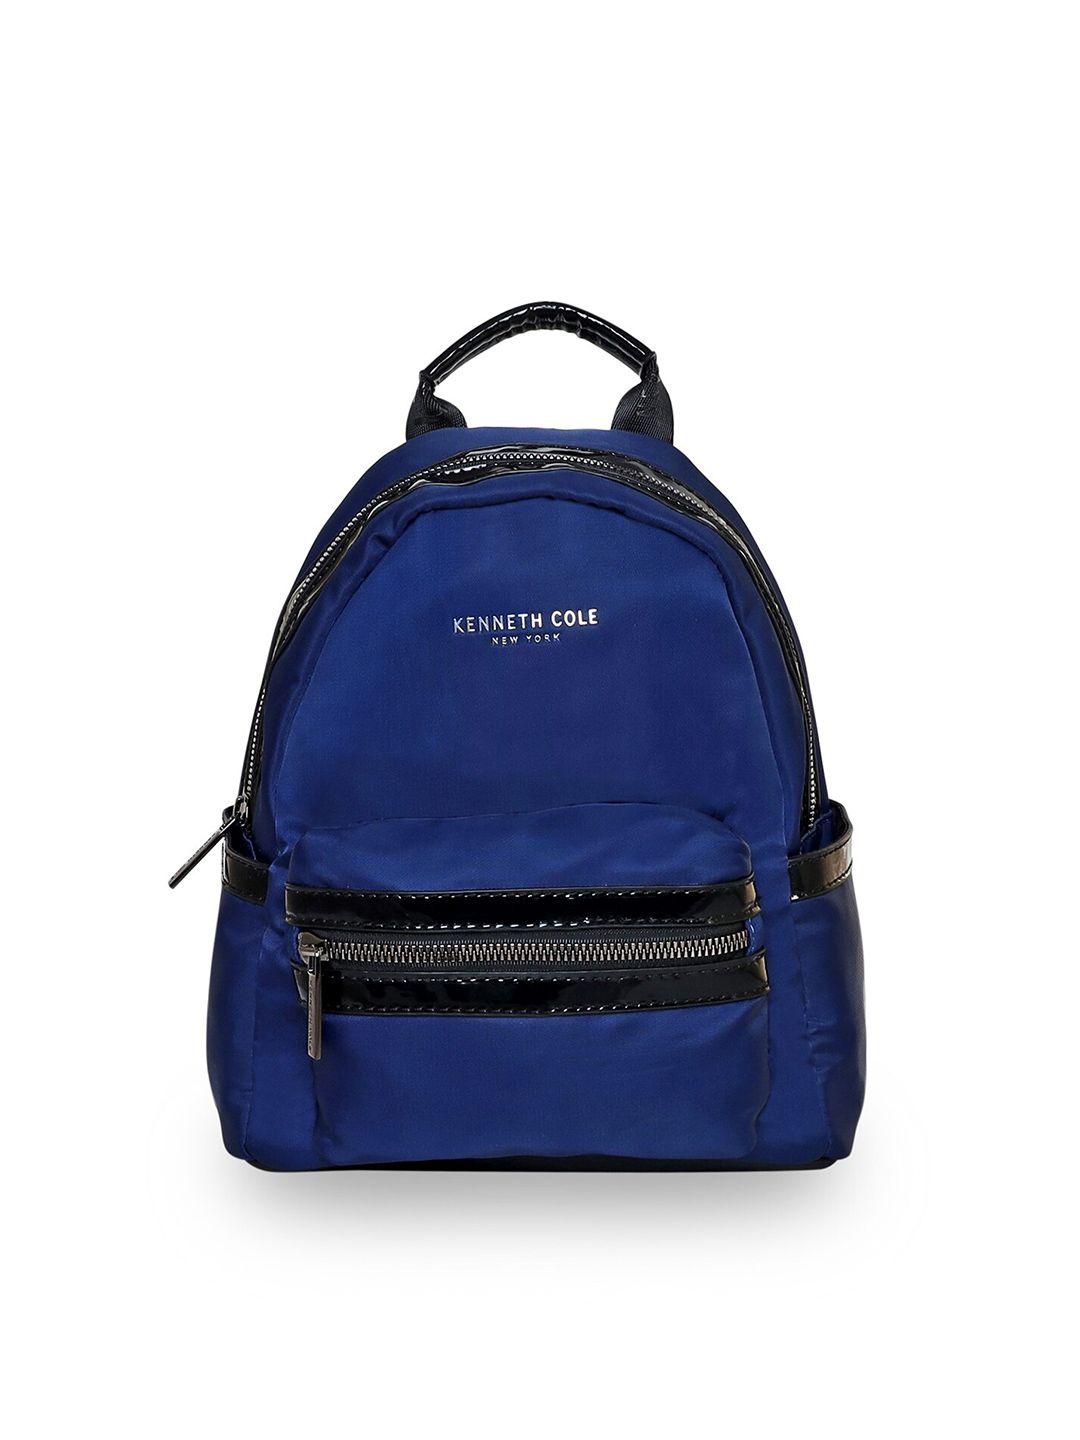 kenneth cole women blue & black backpack